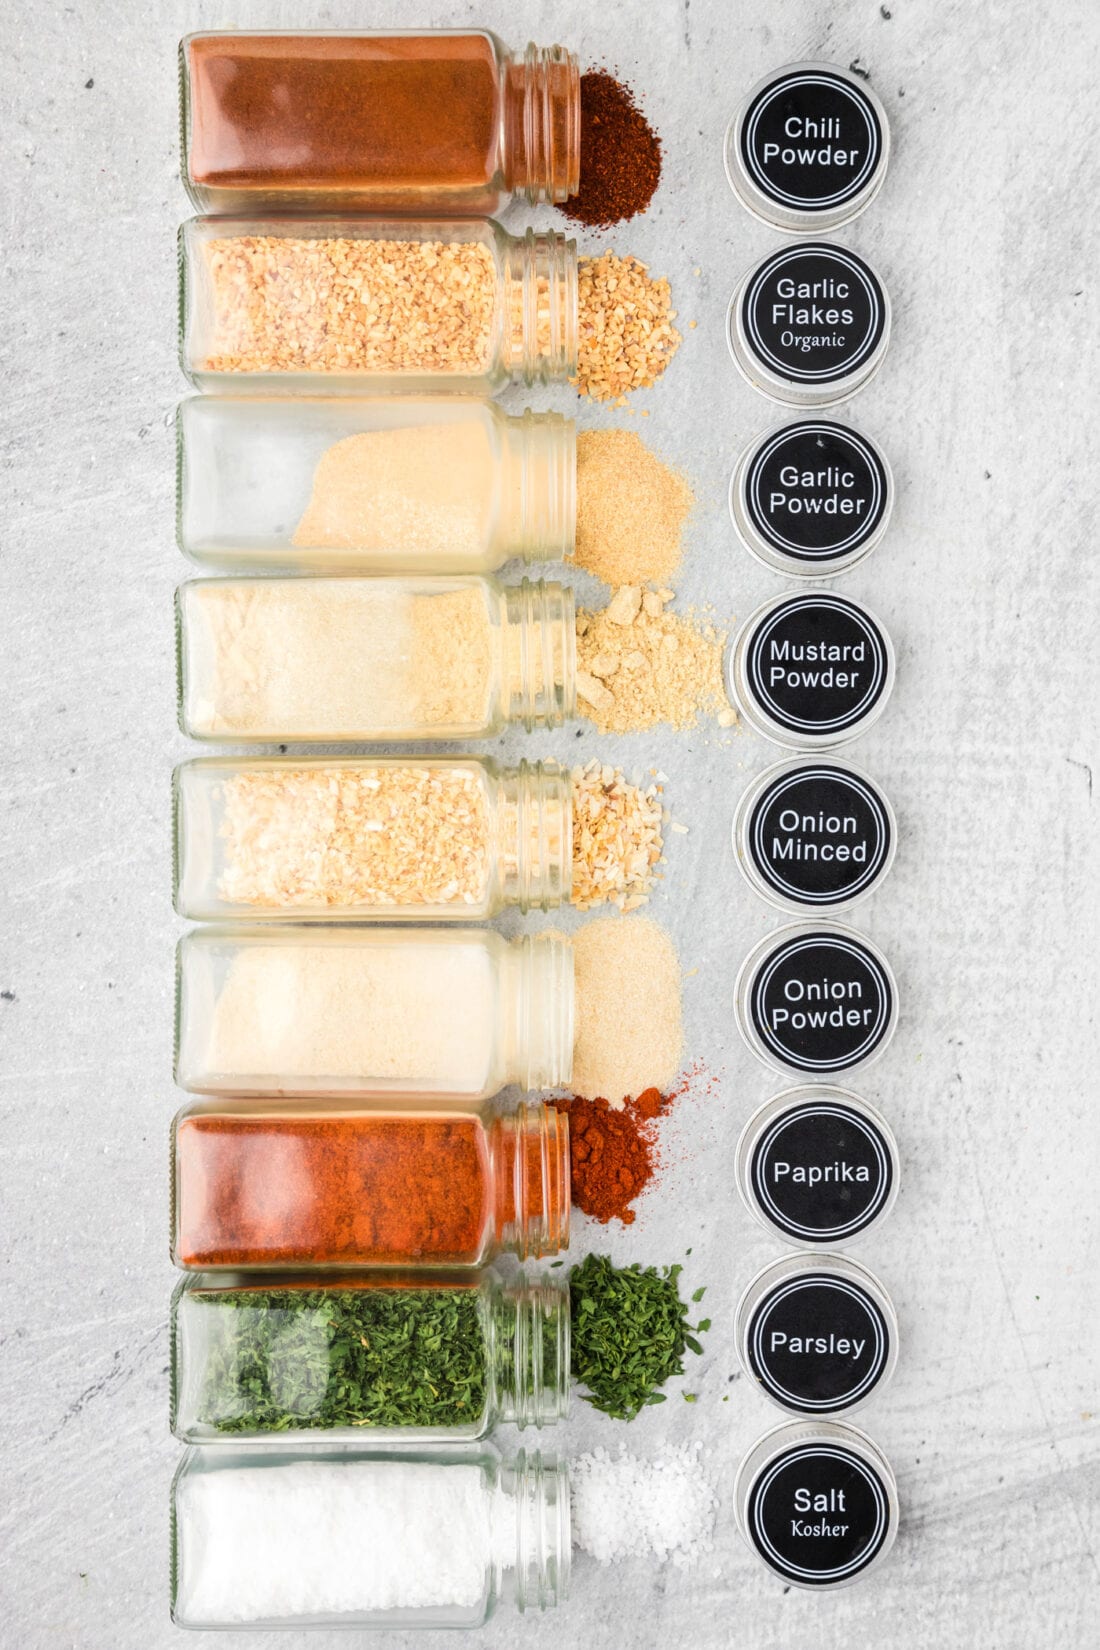 Spice jars of seasonings needed to create All Purpose Seasoning